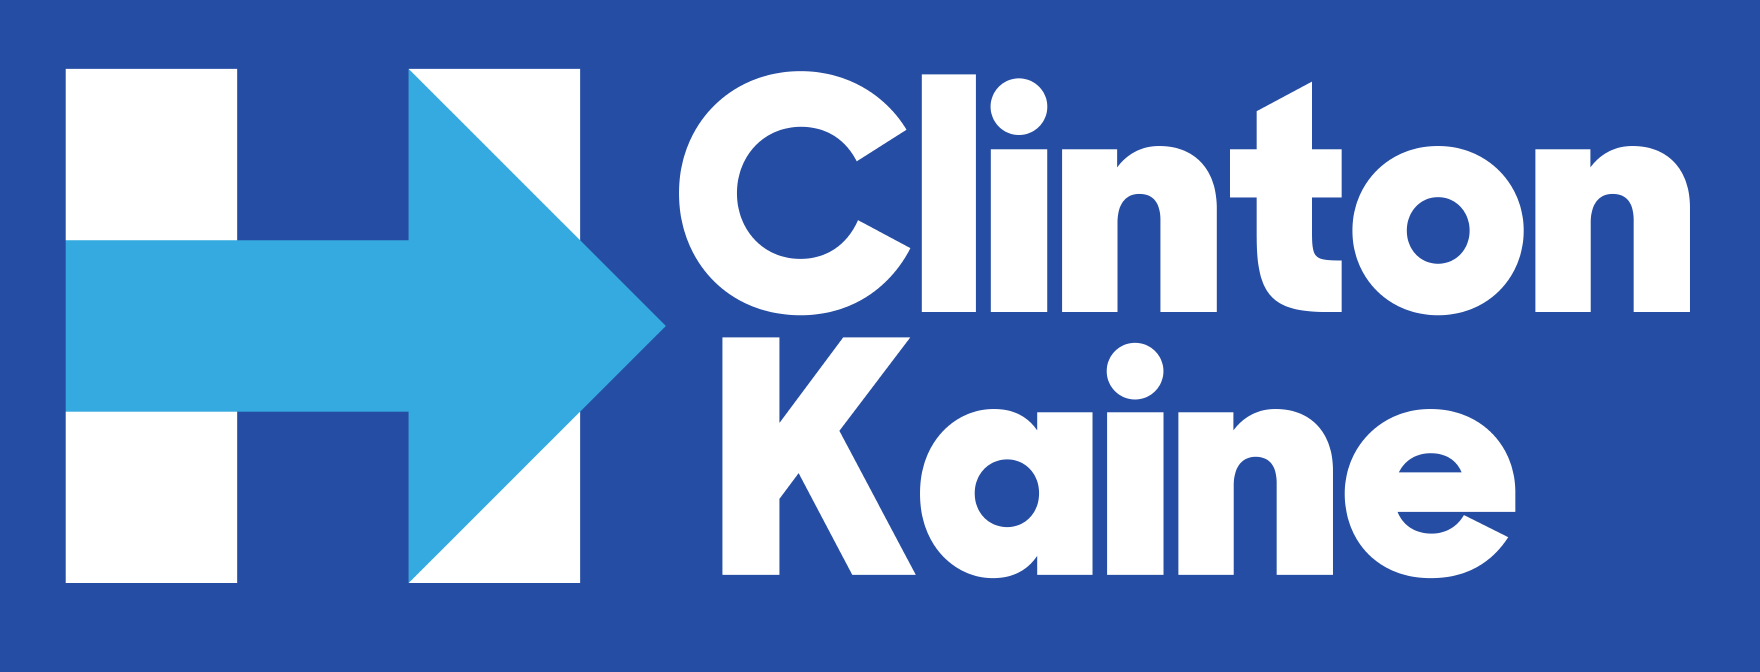 Clinton-Kaine blue v2.png